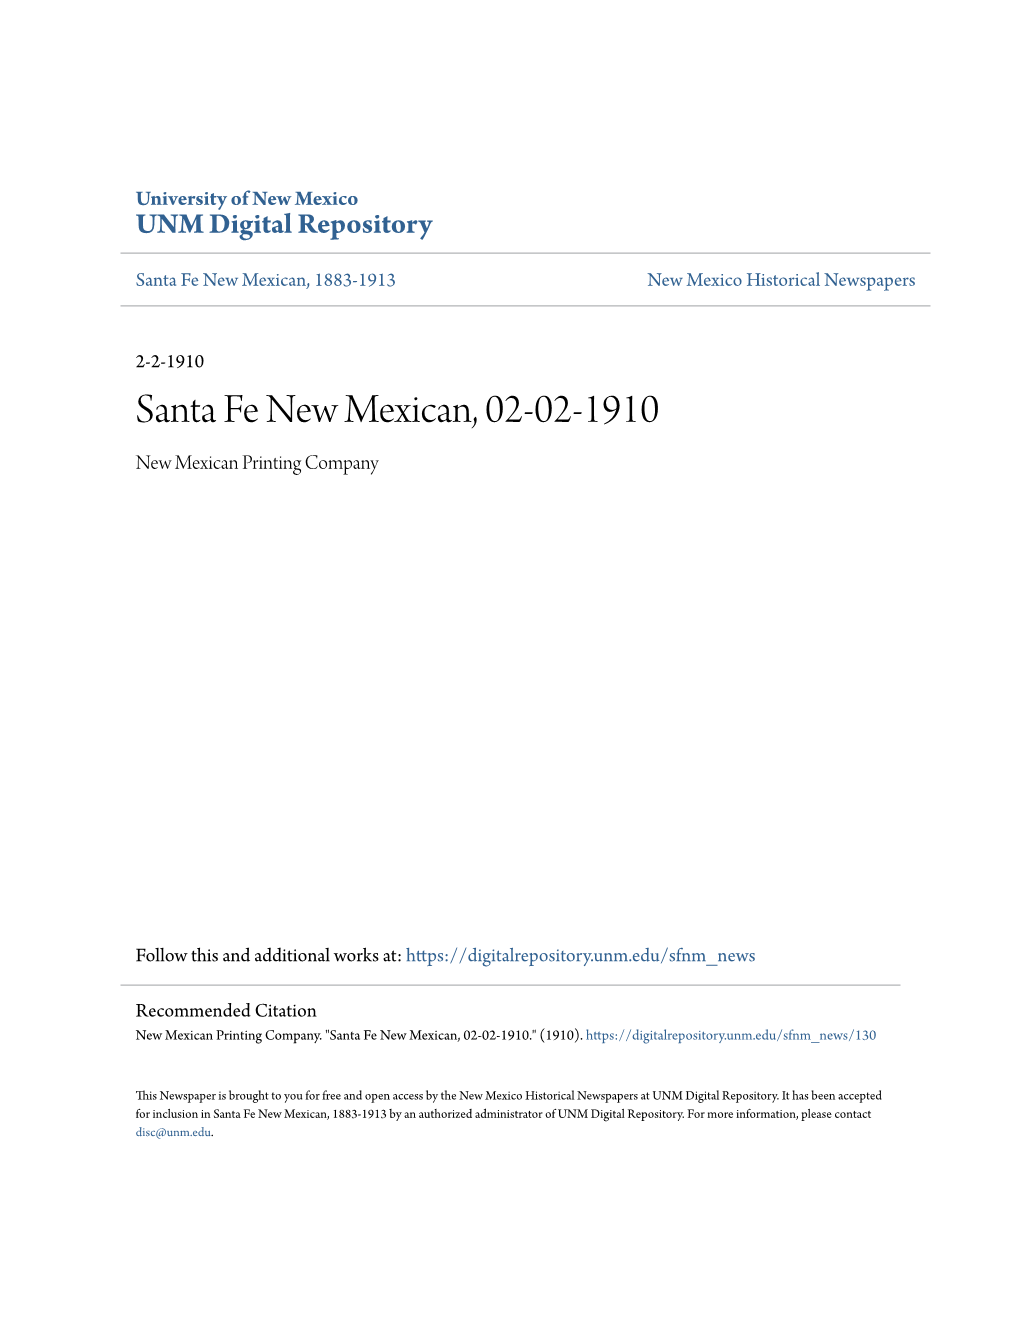 Santa Fe New Mexican, 02-02-1910 New Mexican Printing Company